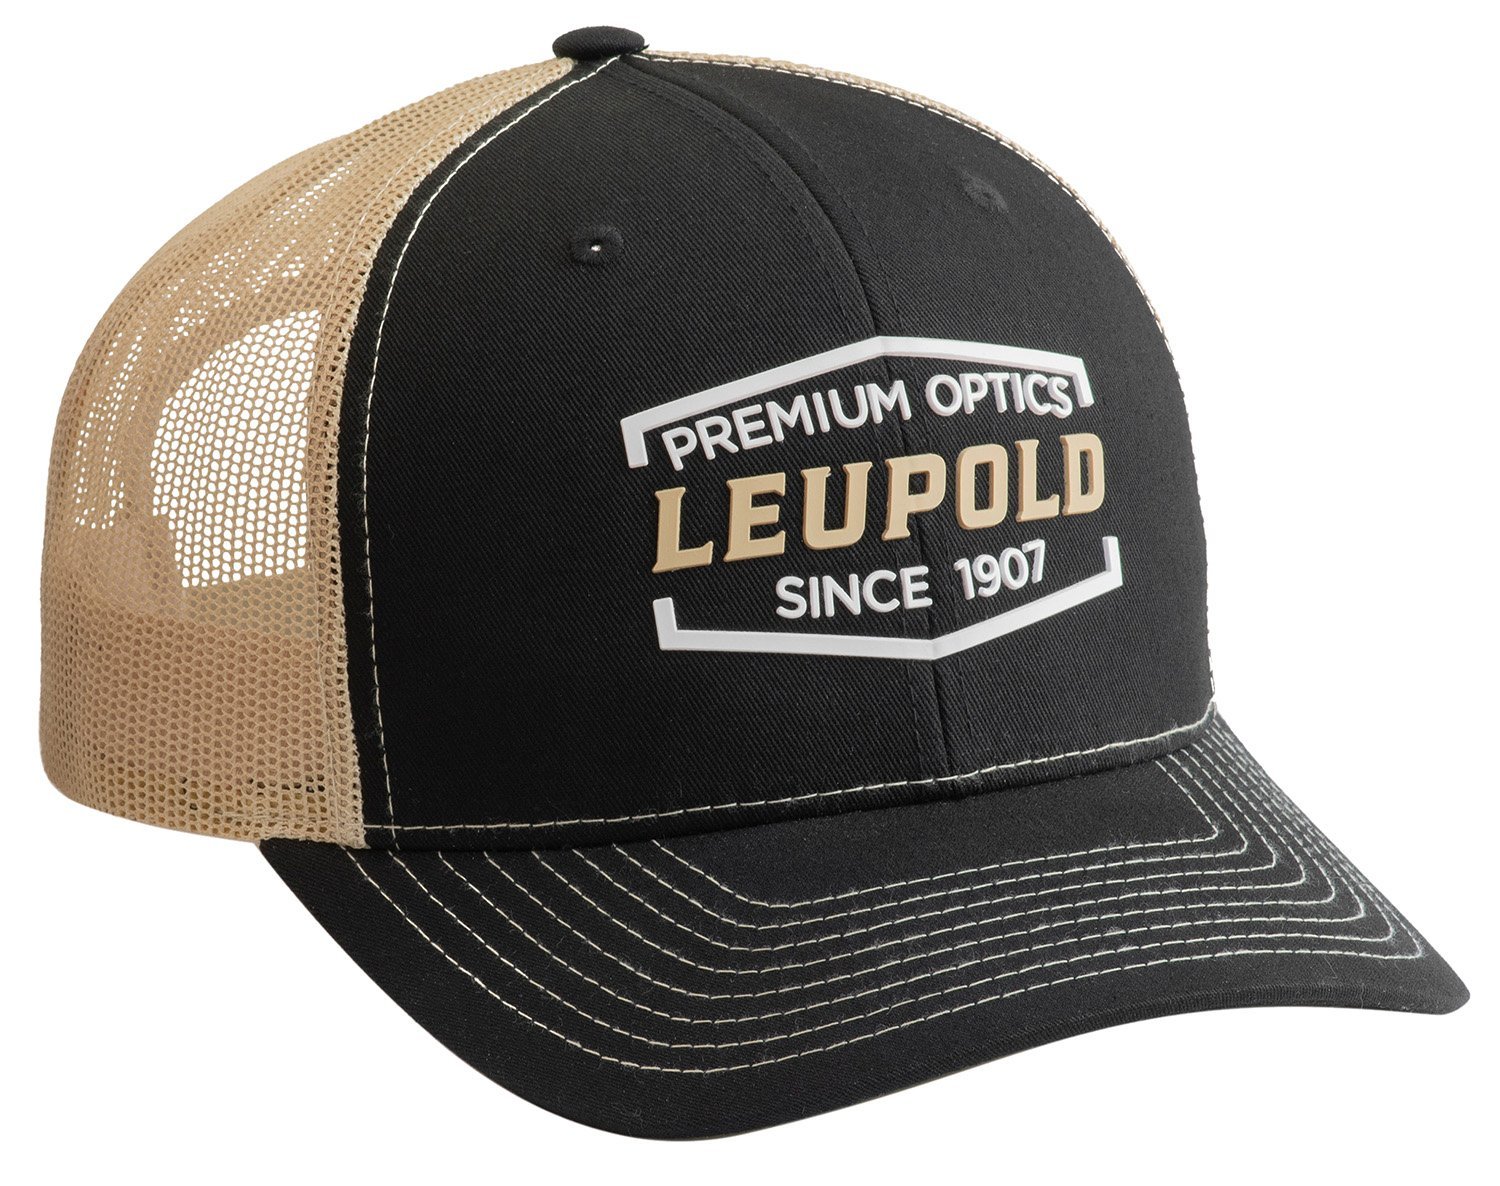 Leupold Premium Optics Trucker Hat Black/Gold OSFA - Pacific Flyway Supplies